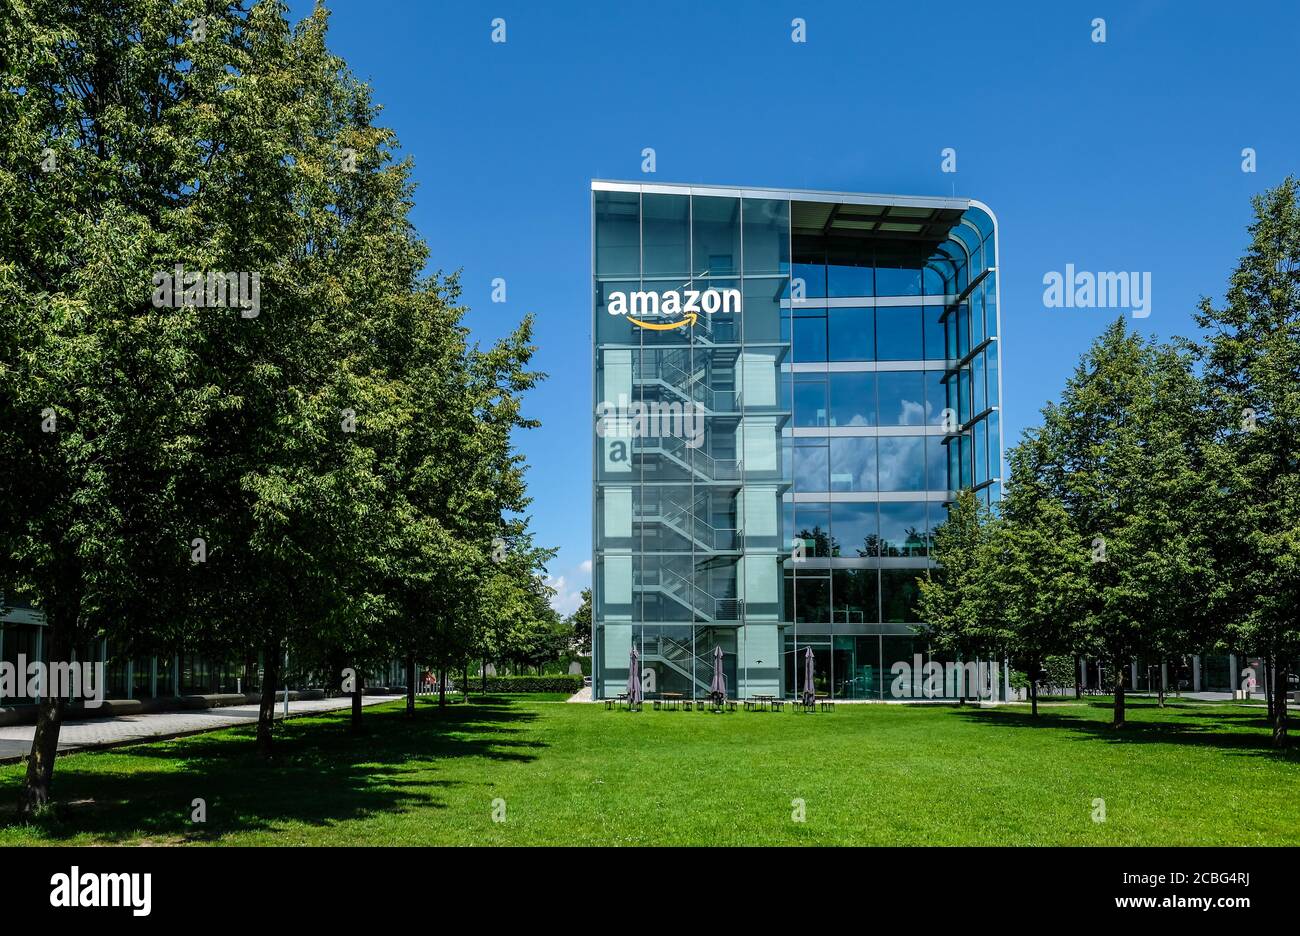 Amazon headquarter building in Munich Germany Stock Photo - Alamy